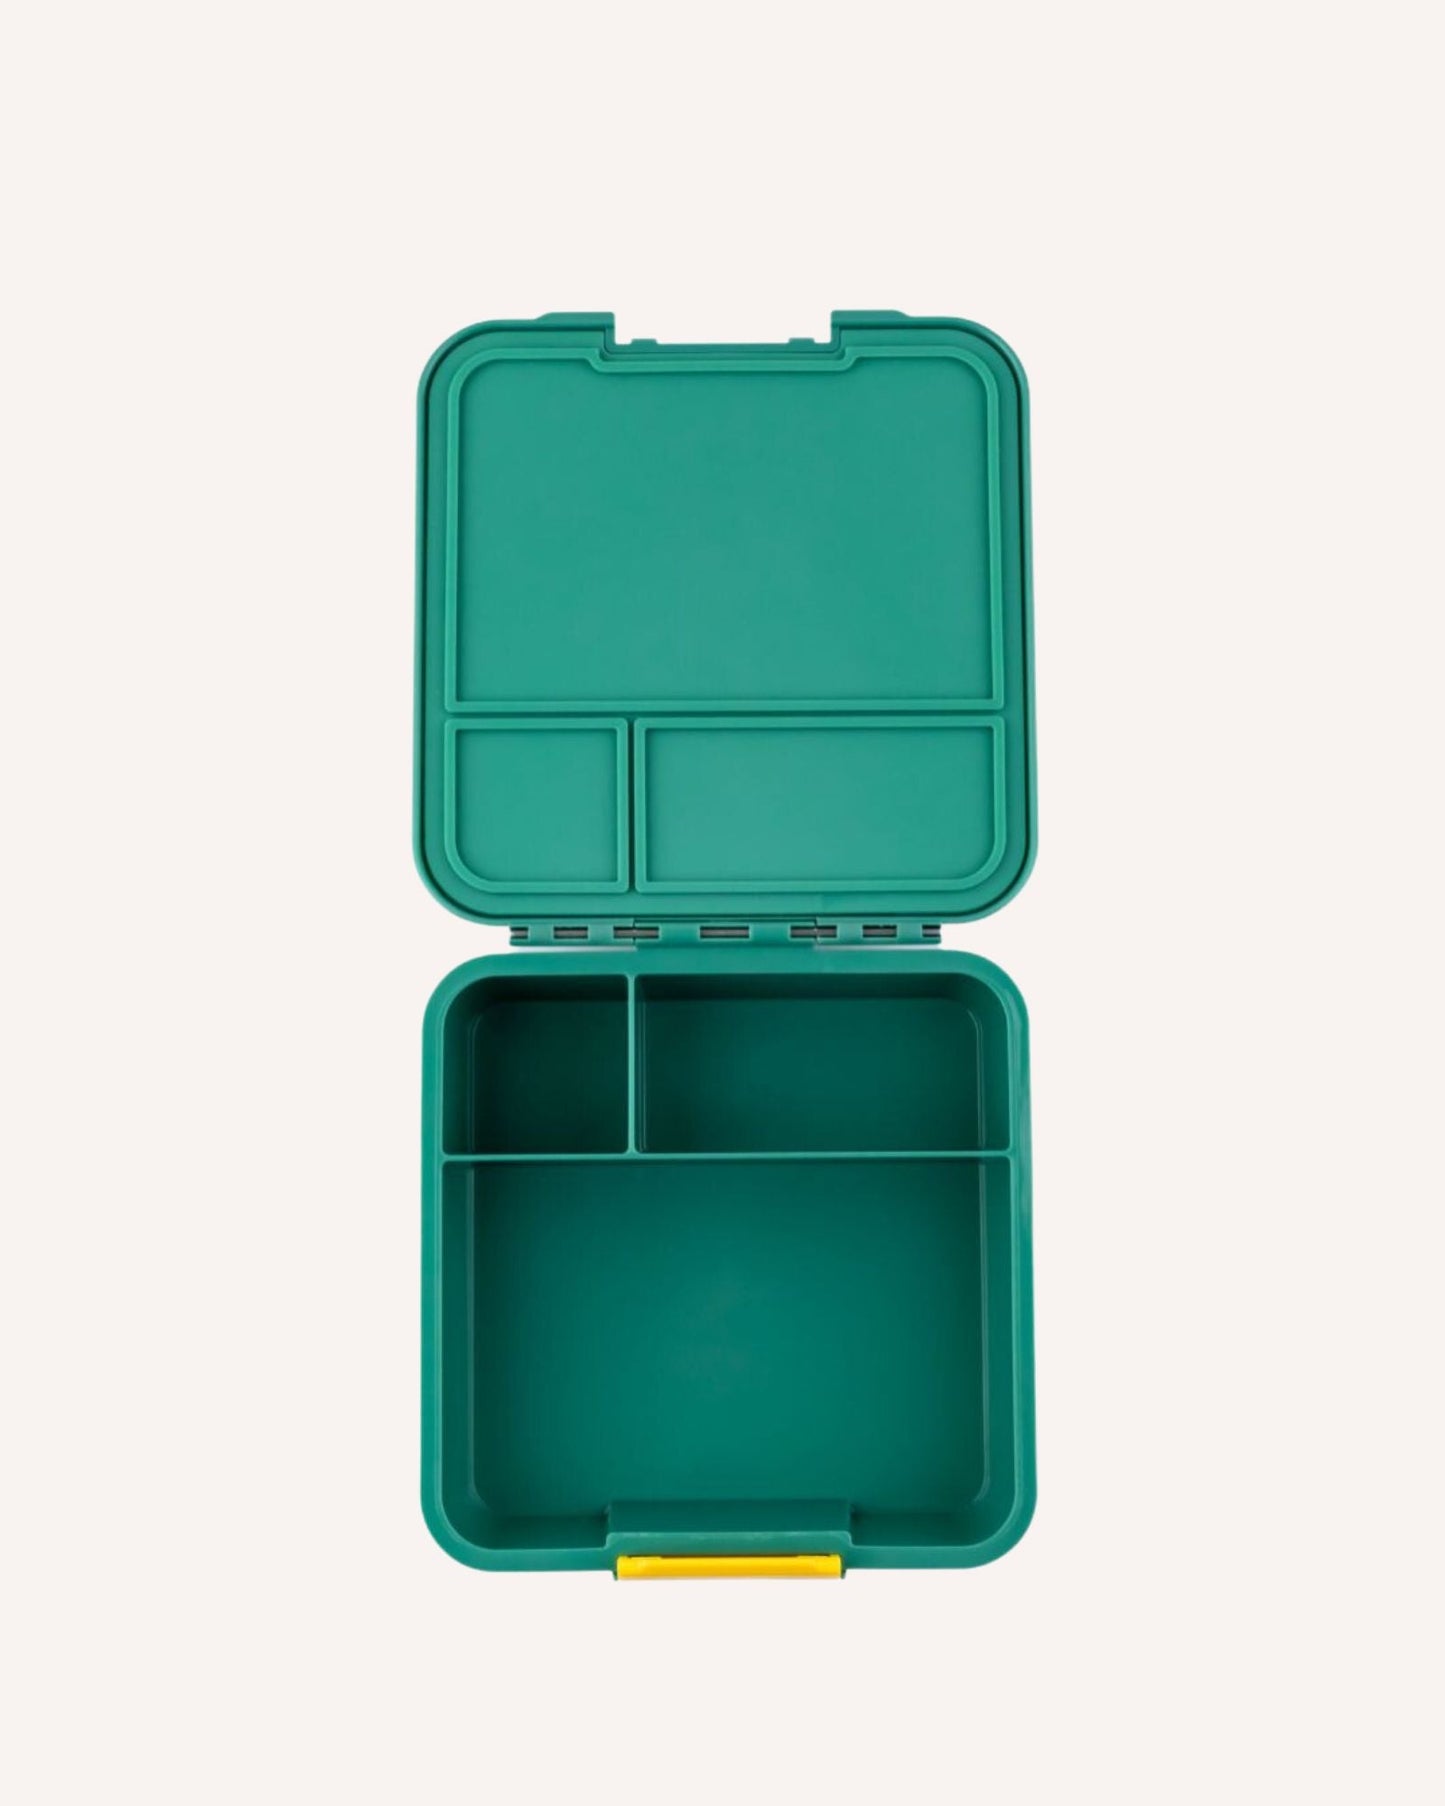 Little Lunch Box Co Bento Three - Apple